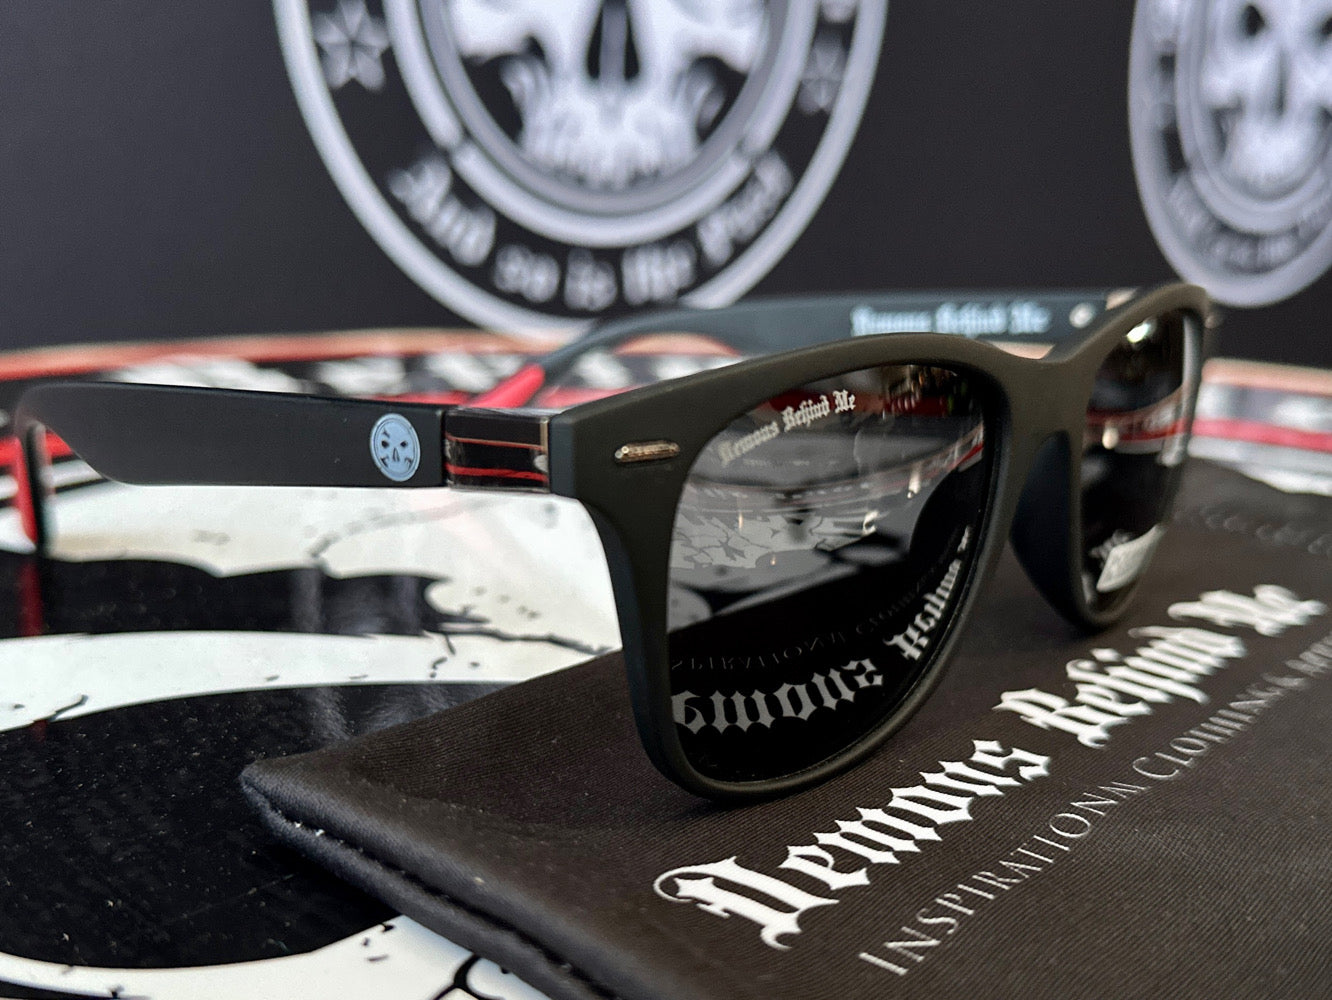 NEW! "The Classic" Matte Black Branded Polarized Sunglasses